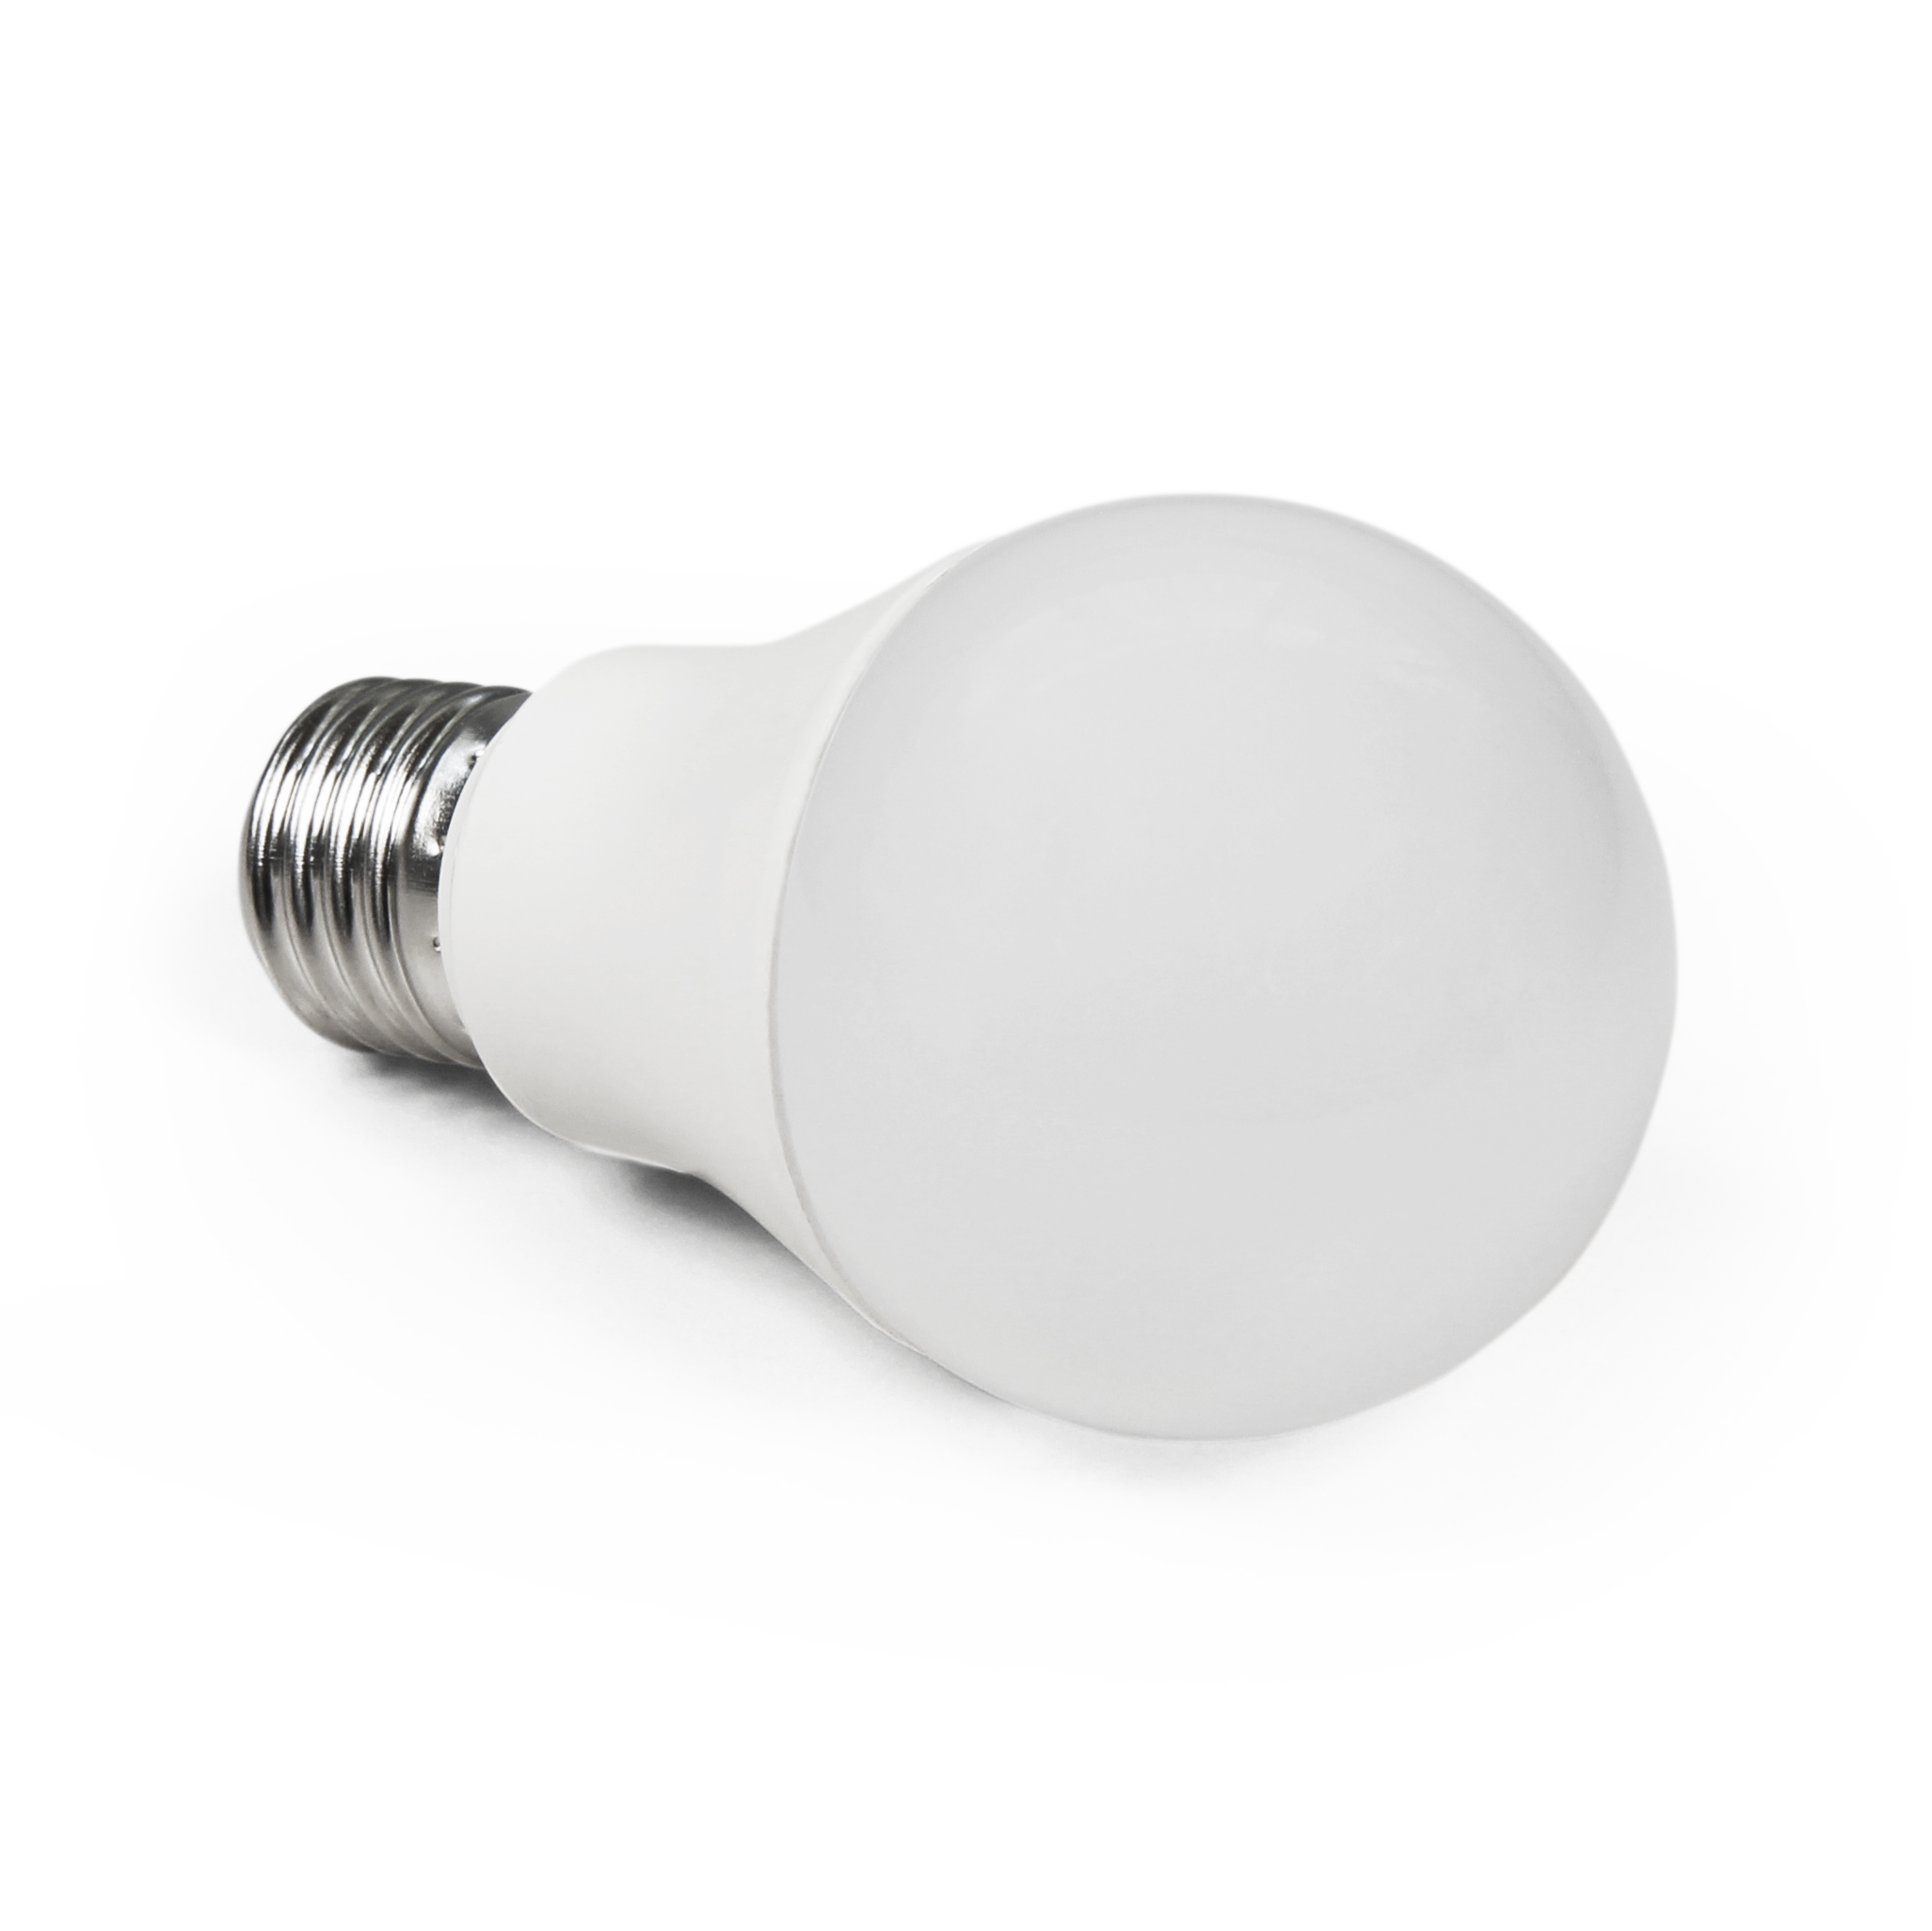 LED Glühlampe McShine, E27, 7W, 650lm, 240°, 3000K, warmweiß, Ø60x109mm